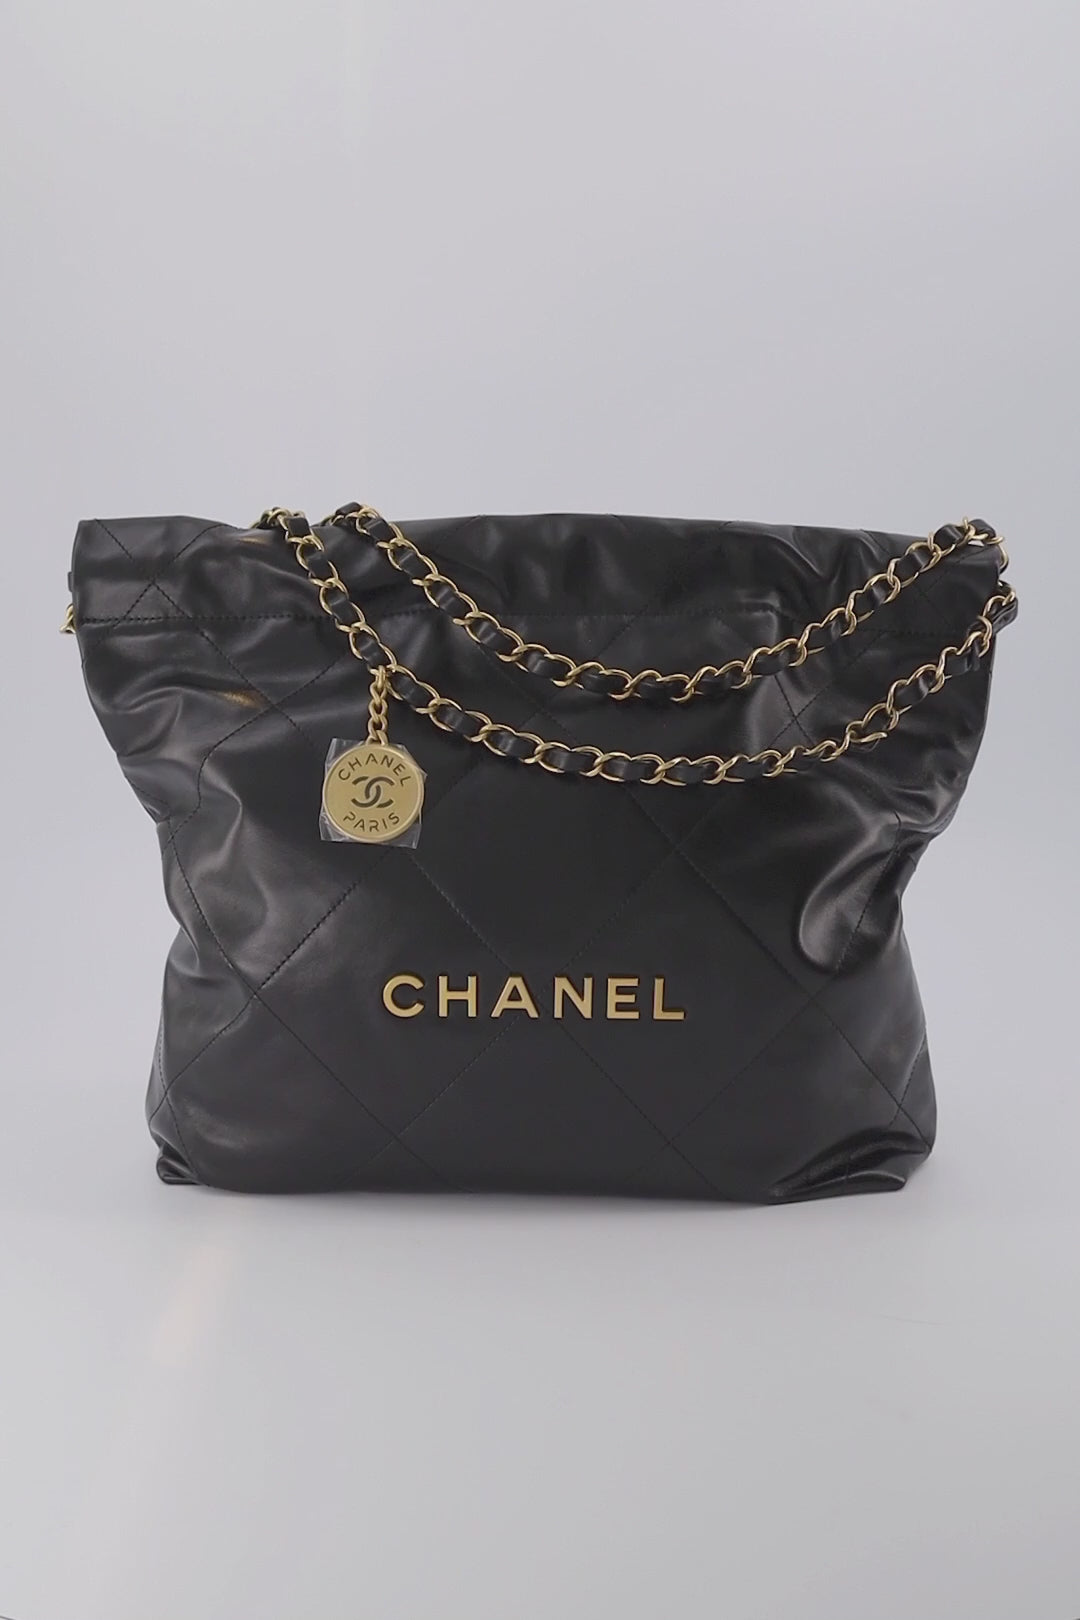 chanel handbag online shopping